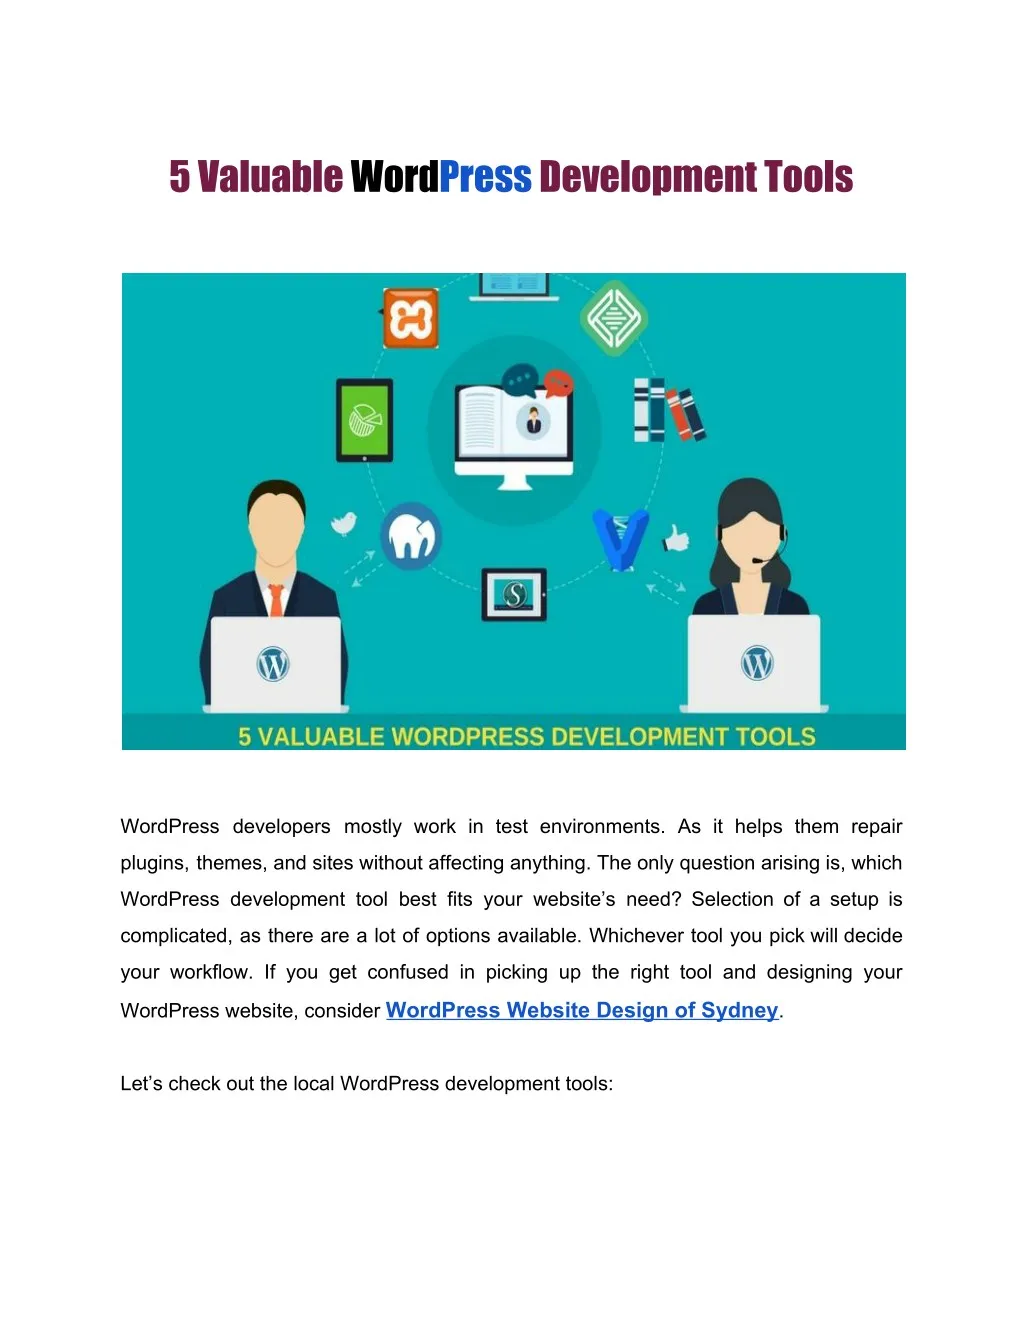 5 valuable word press development tools